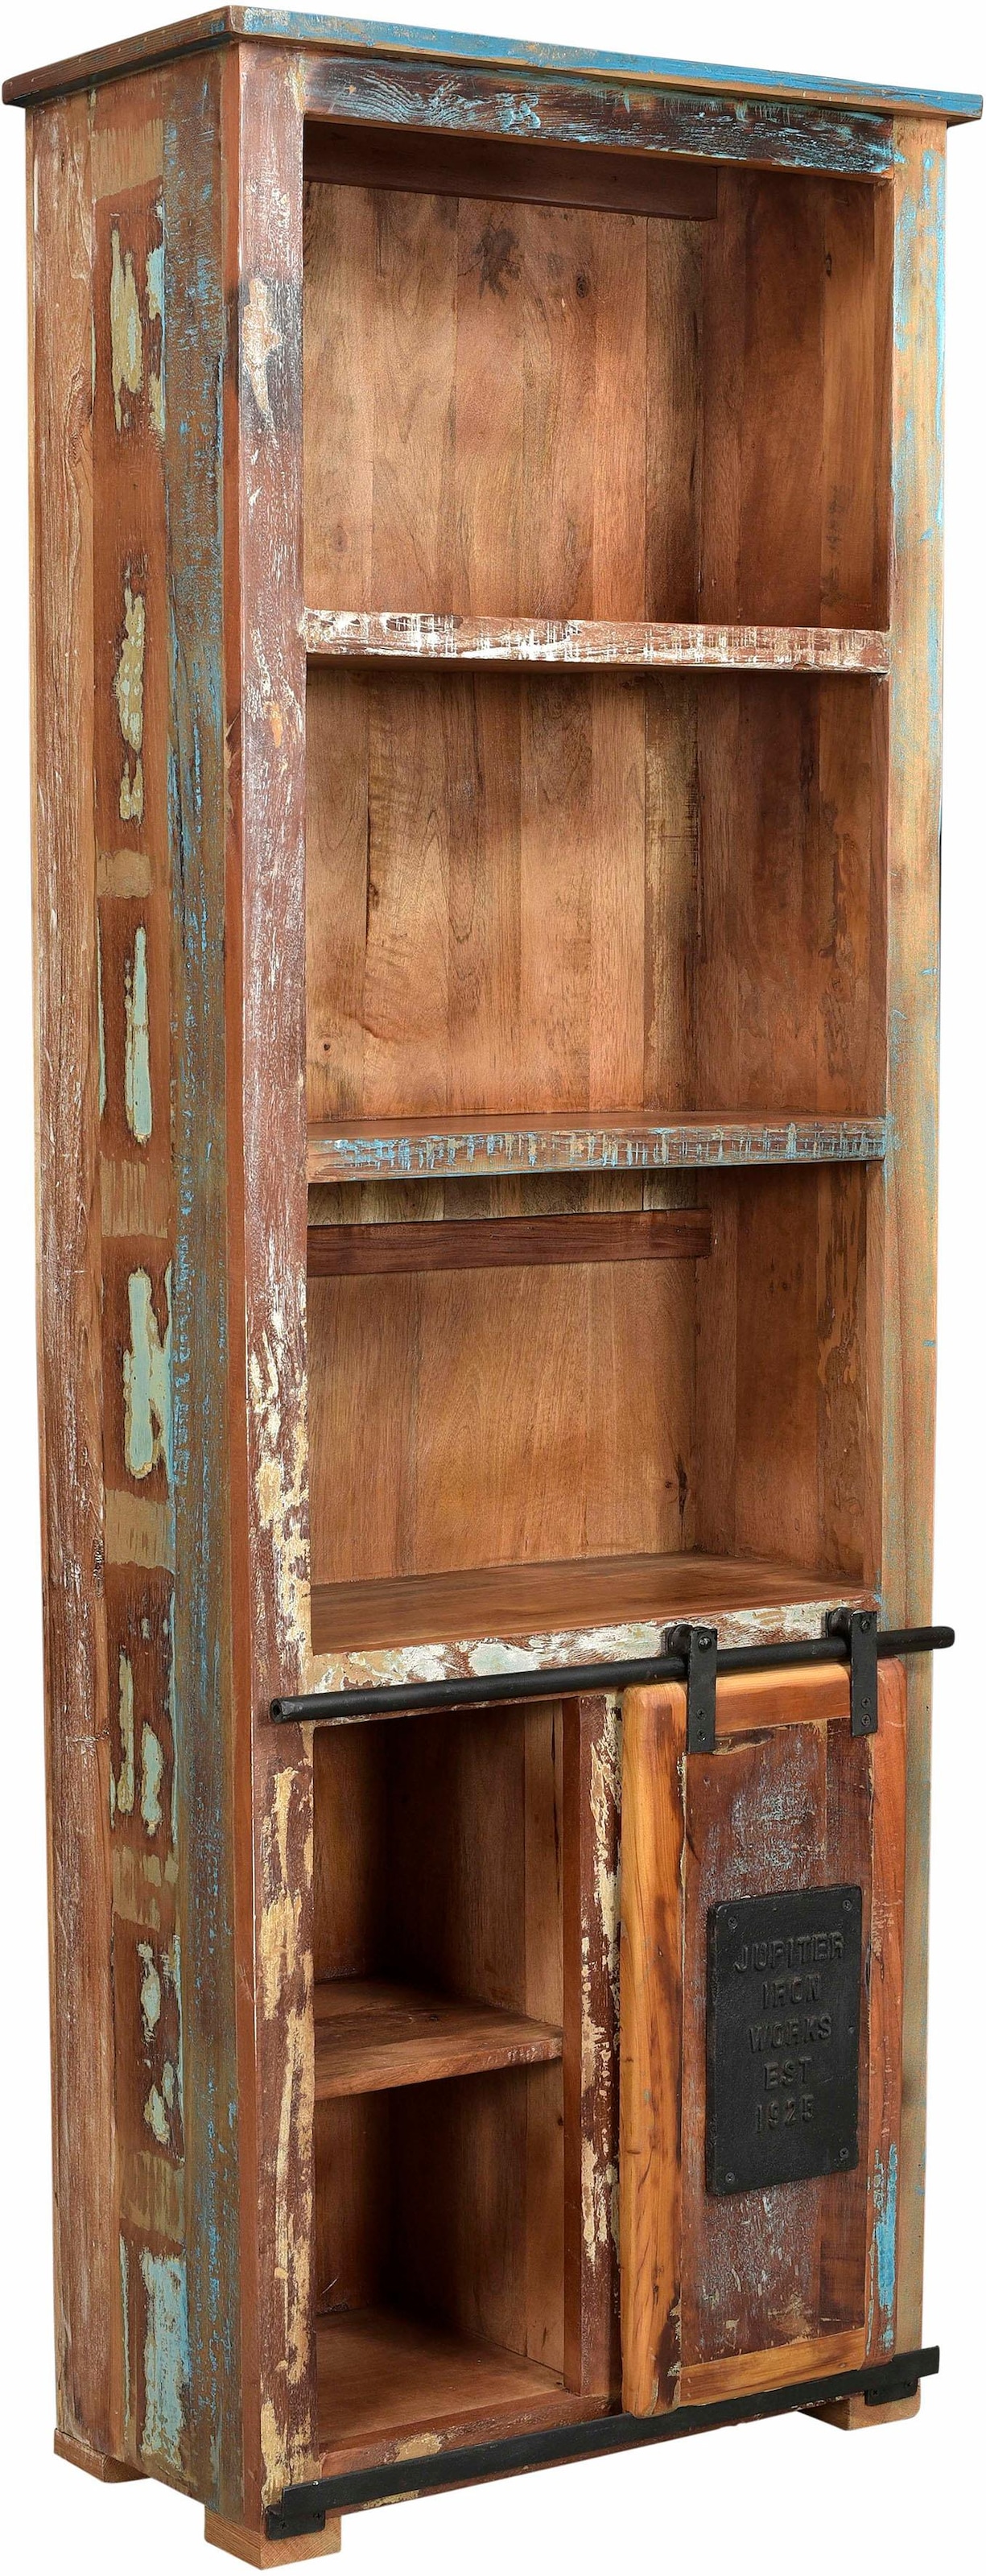 SIT Bücherregal Vintage Shabby 180 cm, Chic, bequem Altholz, aus recyceltem kaufen »Jupiter«, Höhe